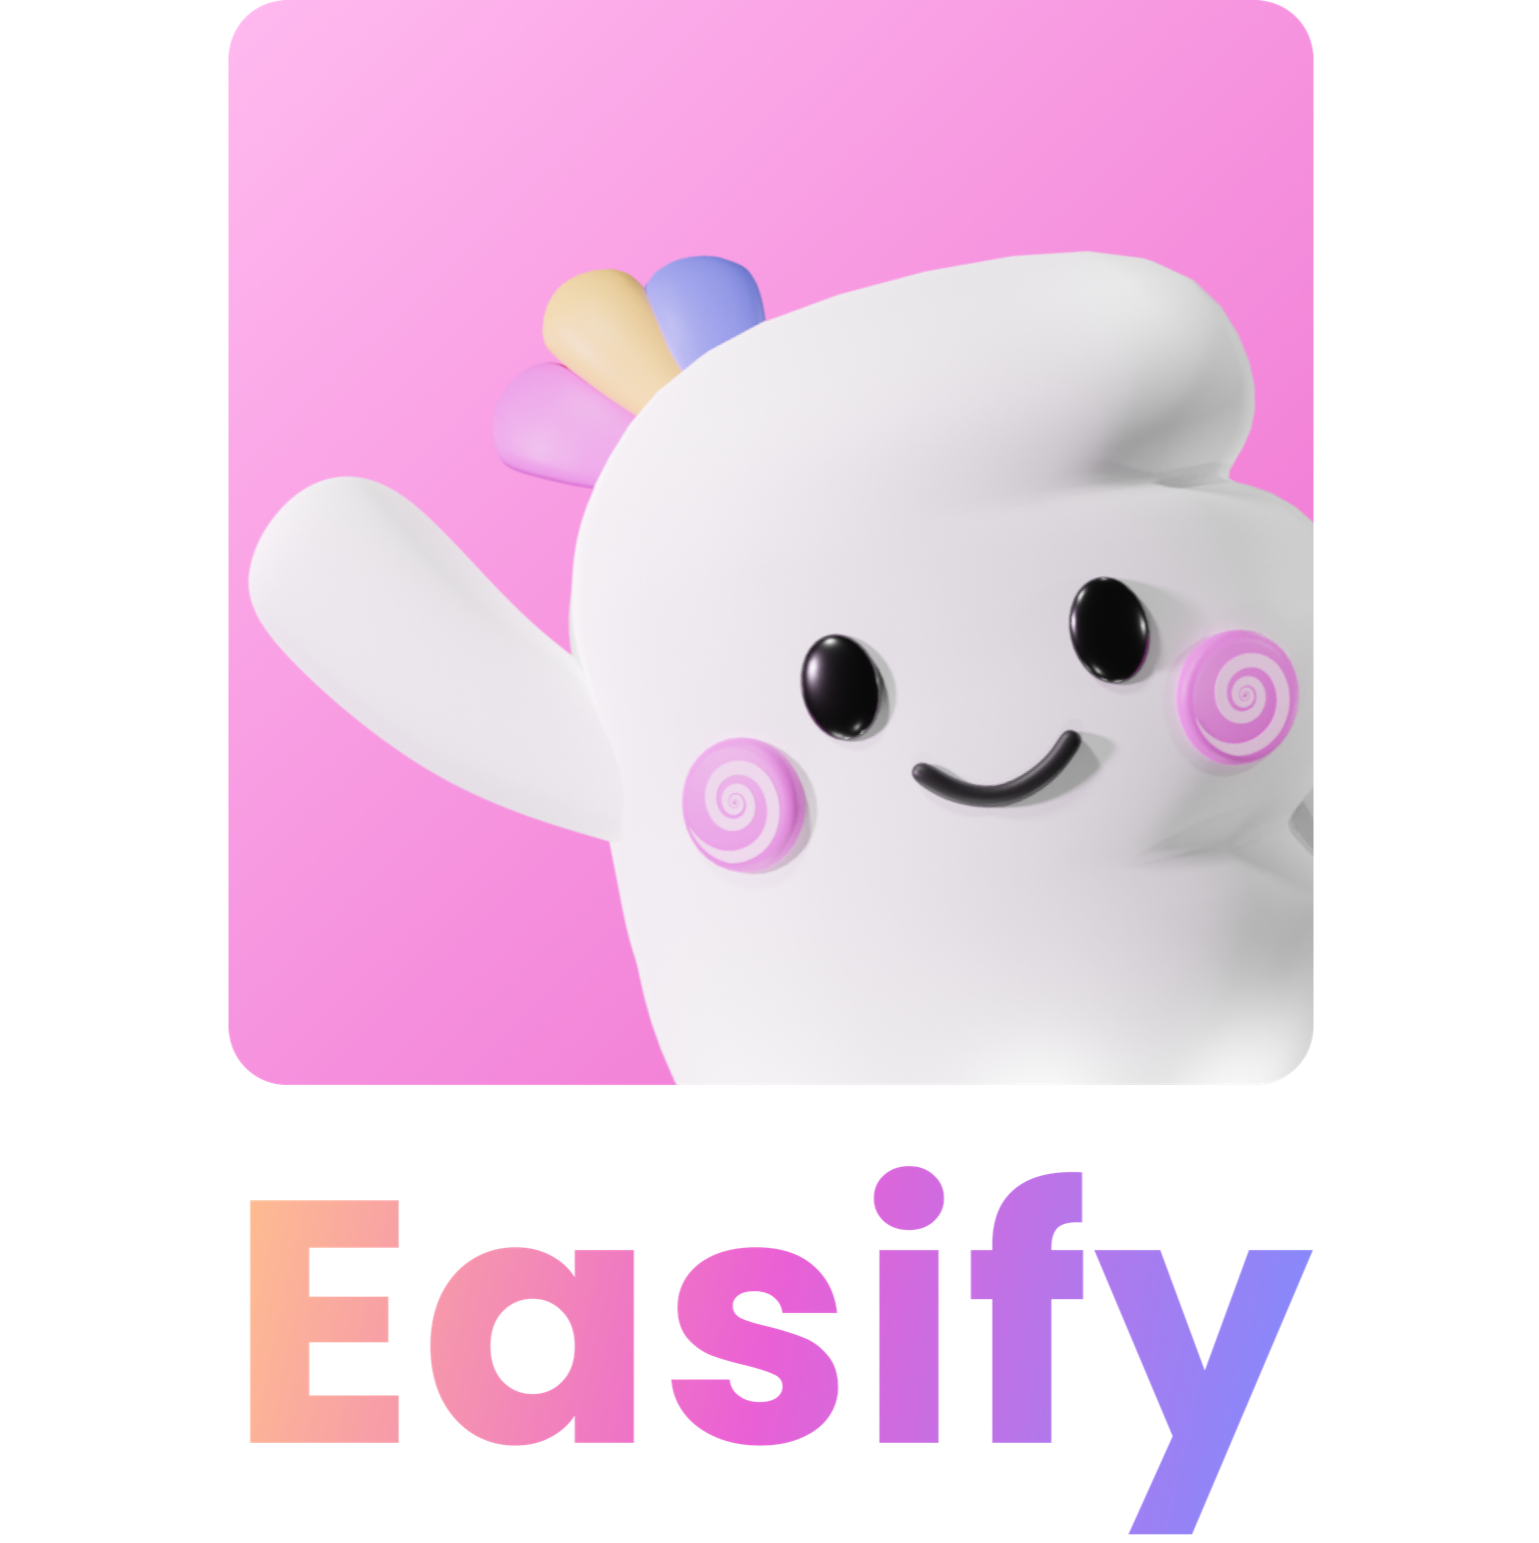 easify apps